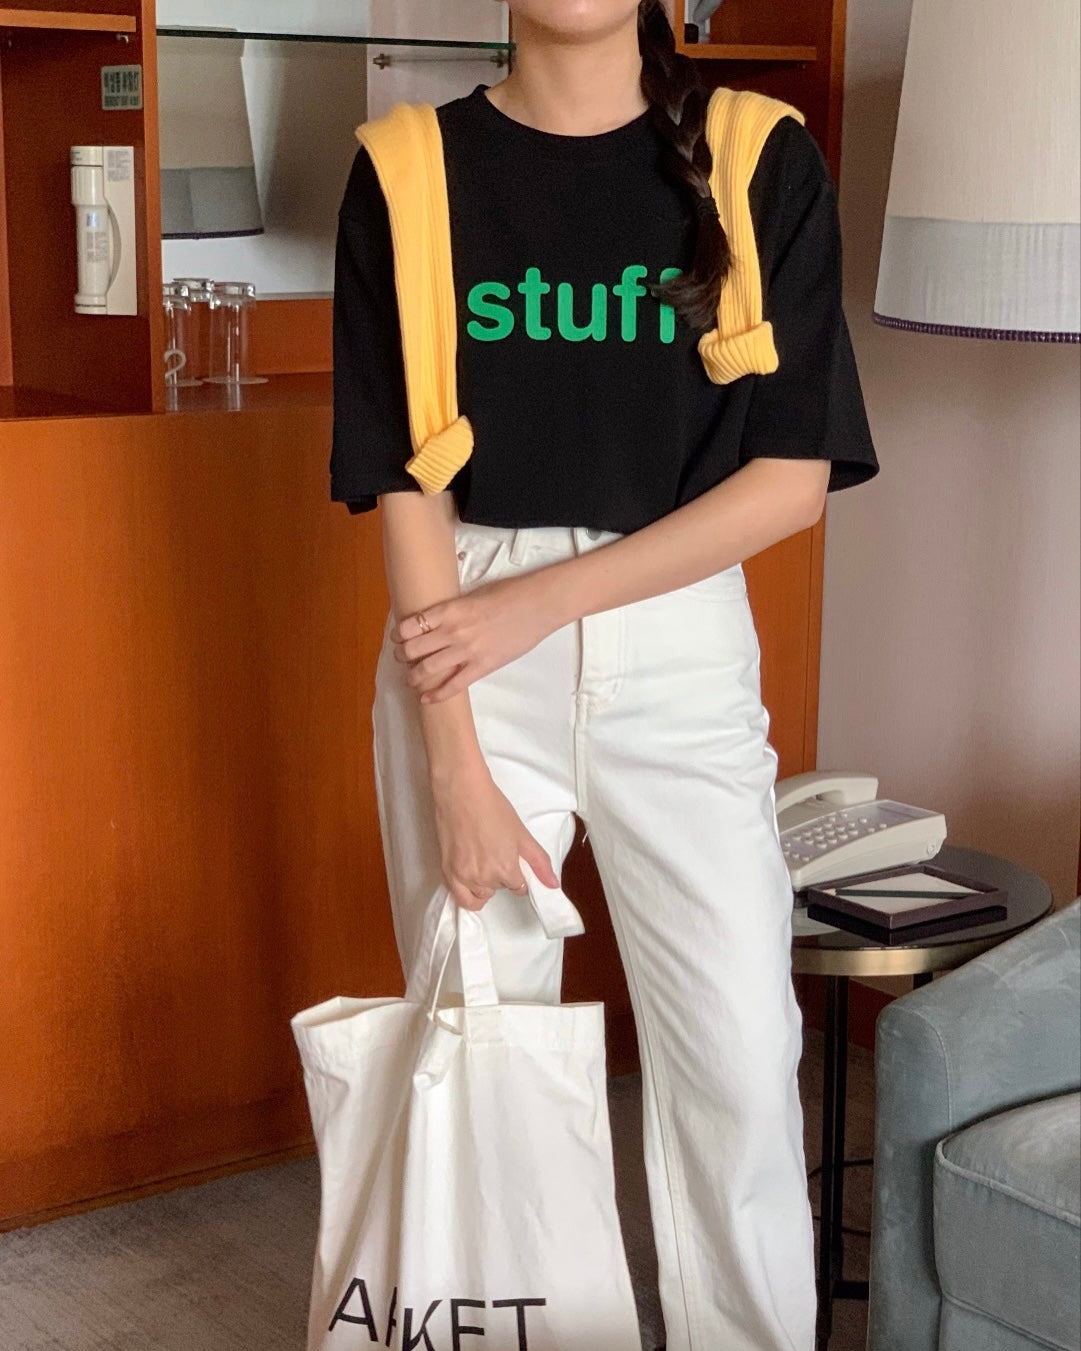 Stuff T Shirt